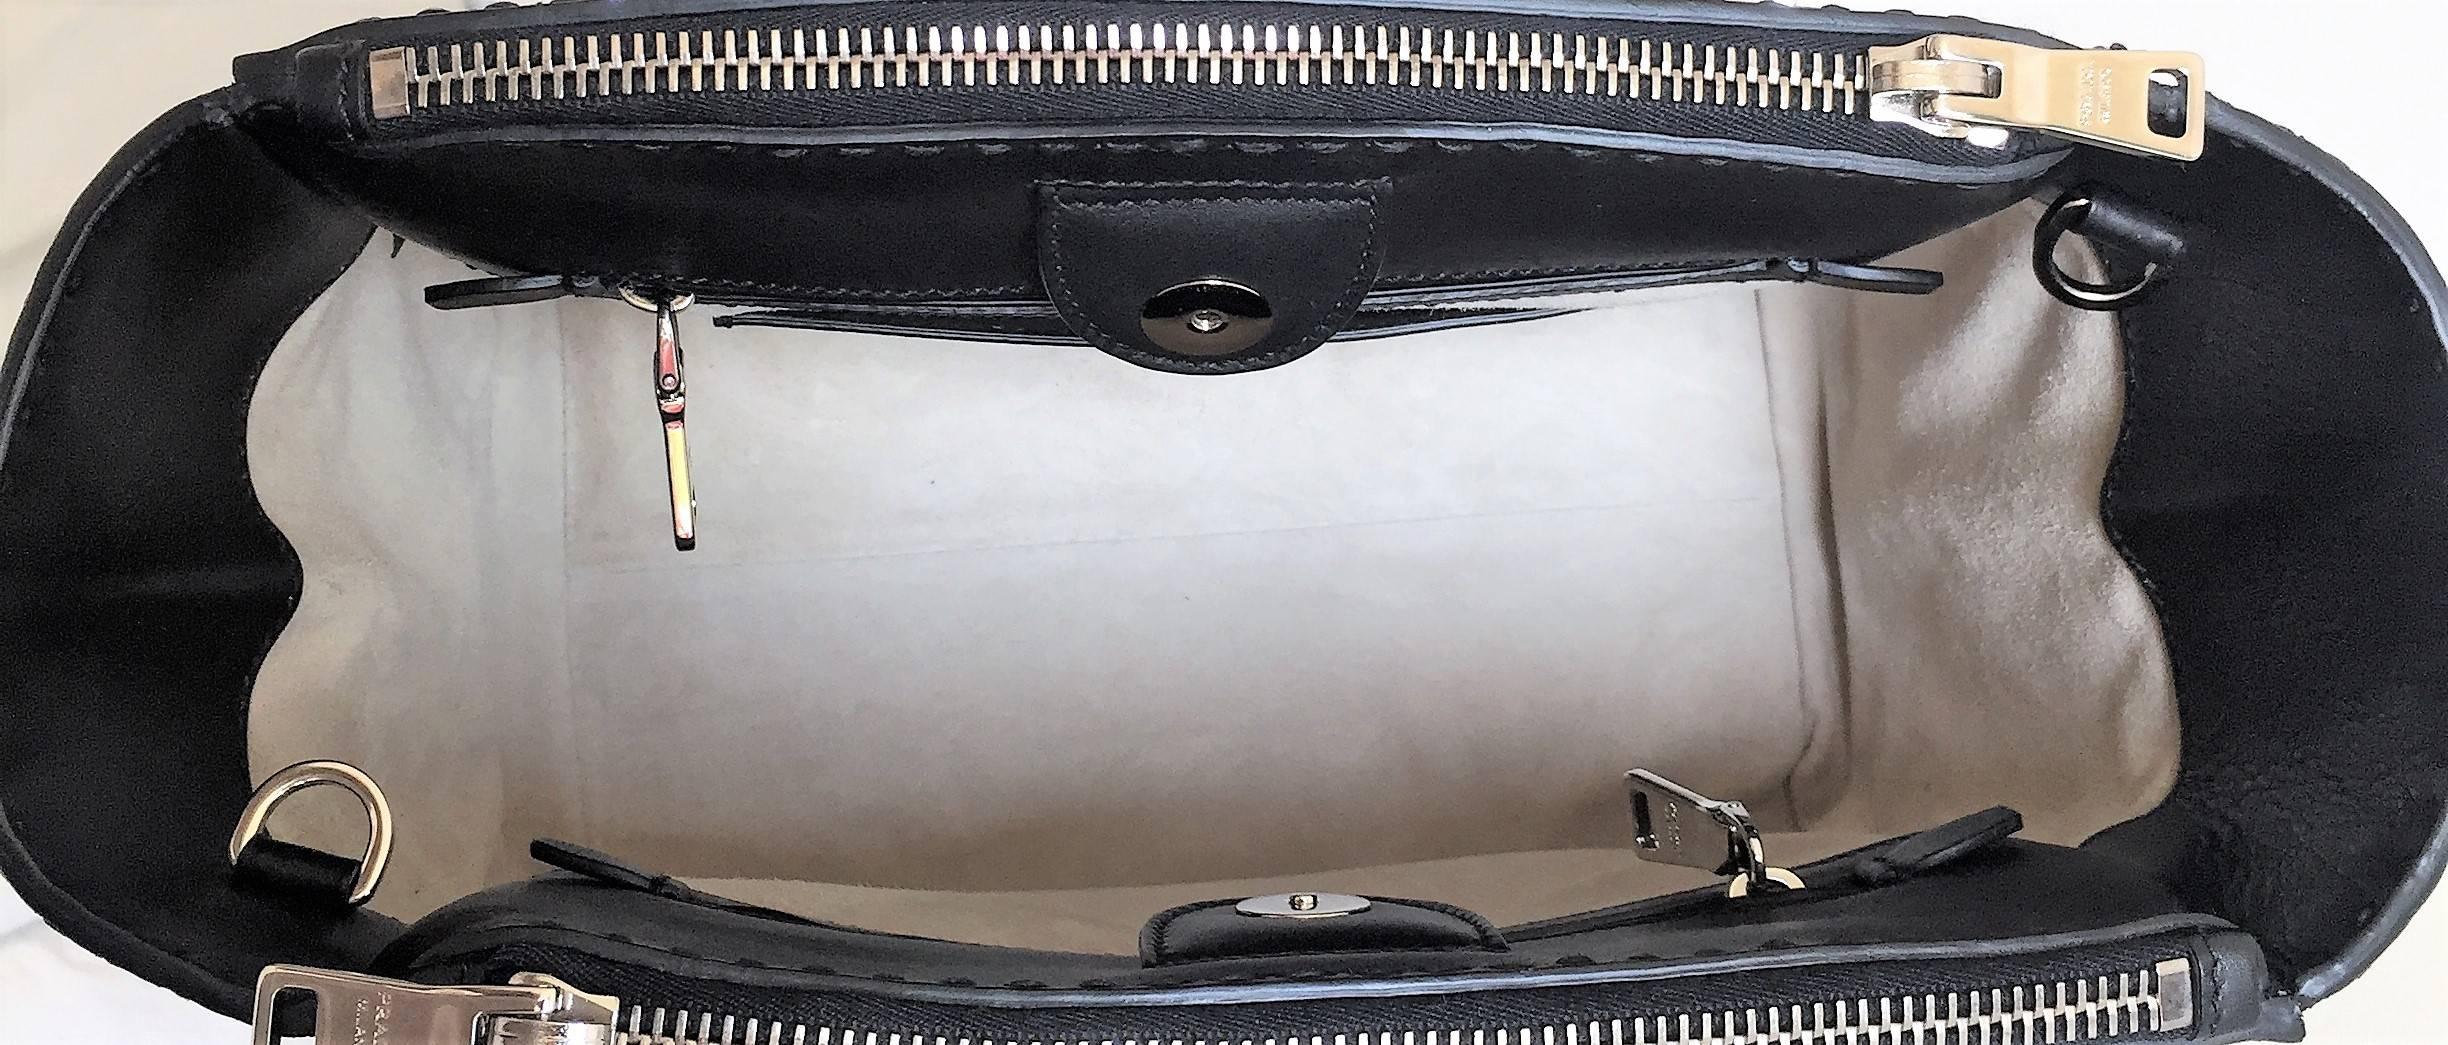 Prada Black Leather Shoulder bag, a Pristine '2way City' Calf Leather Tote For Sale 2